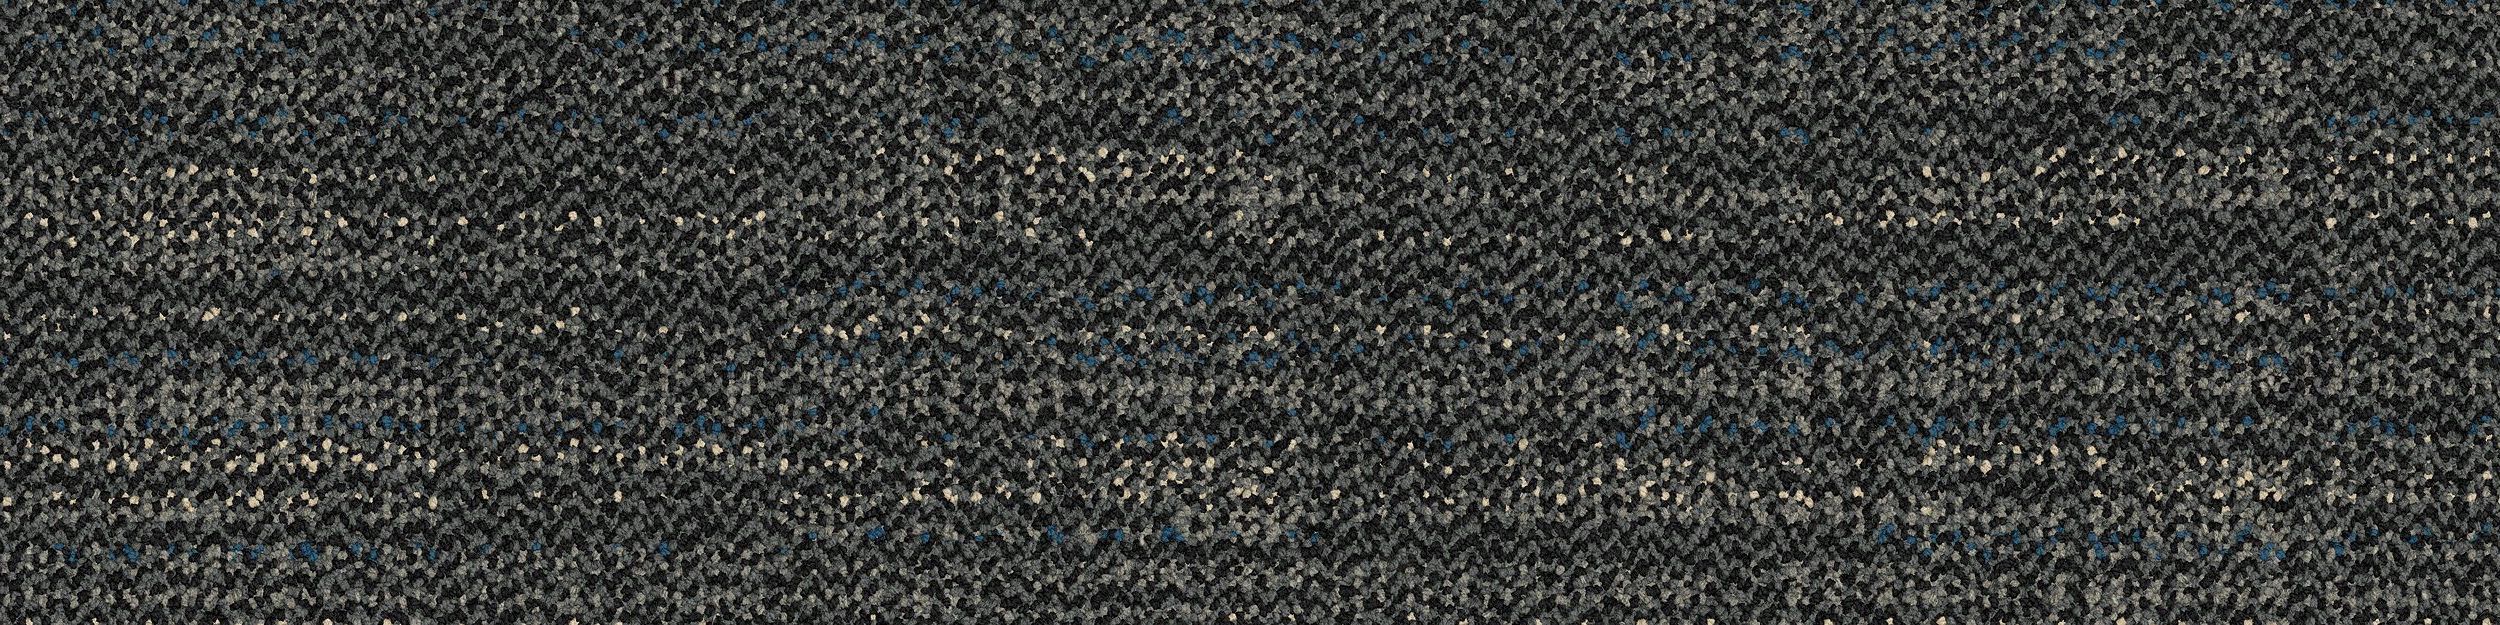 Bitrate Carpet Tile In Dark Aqua imagen número 2